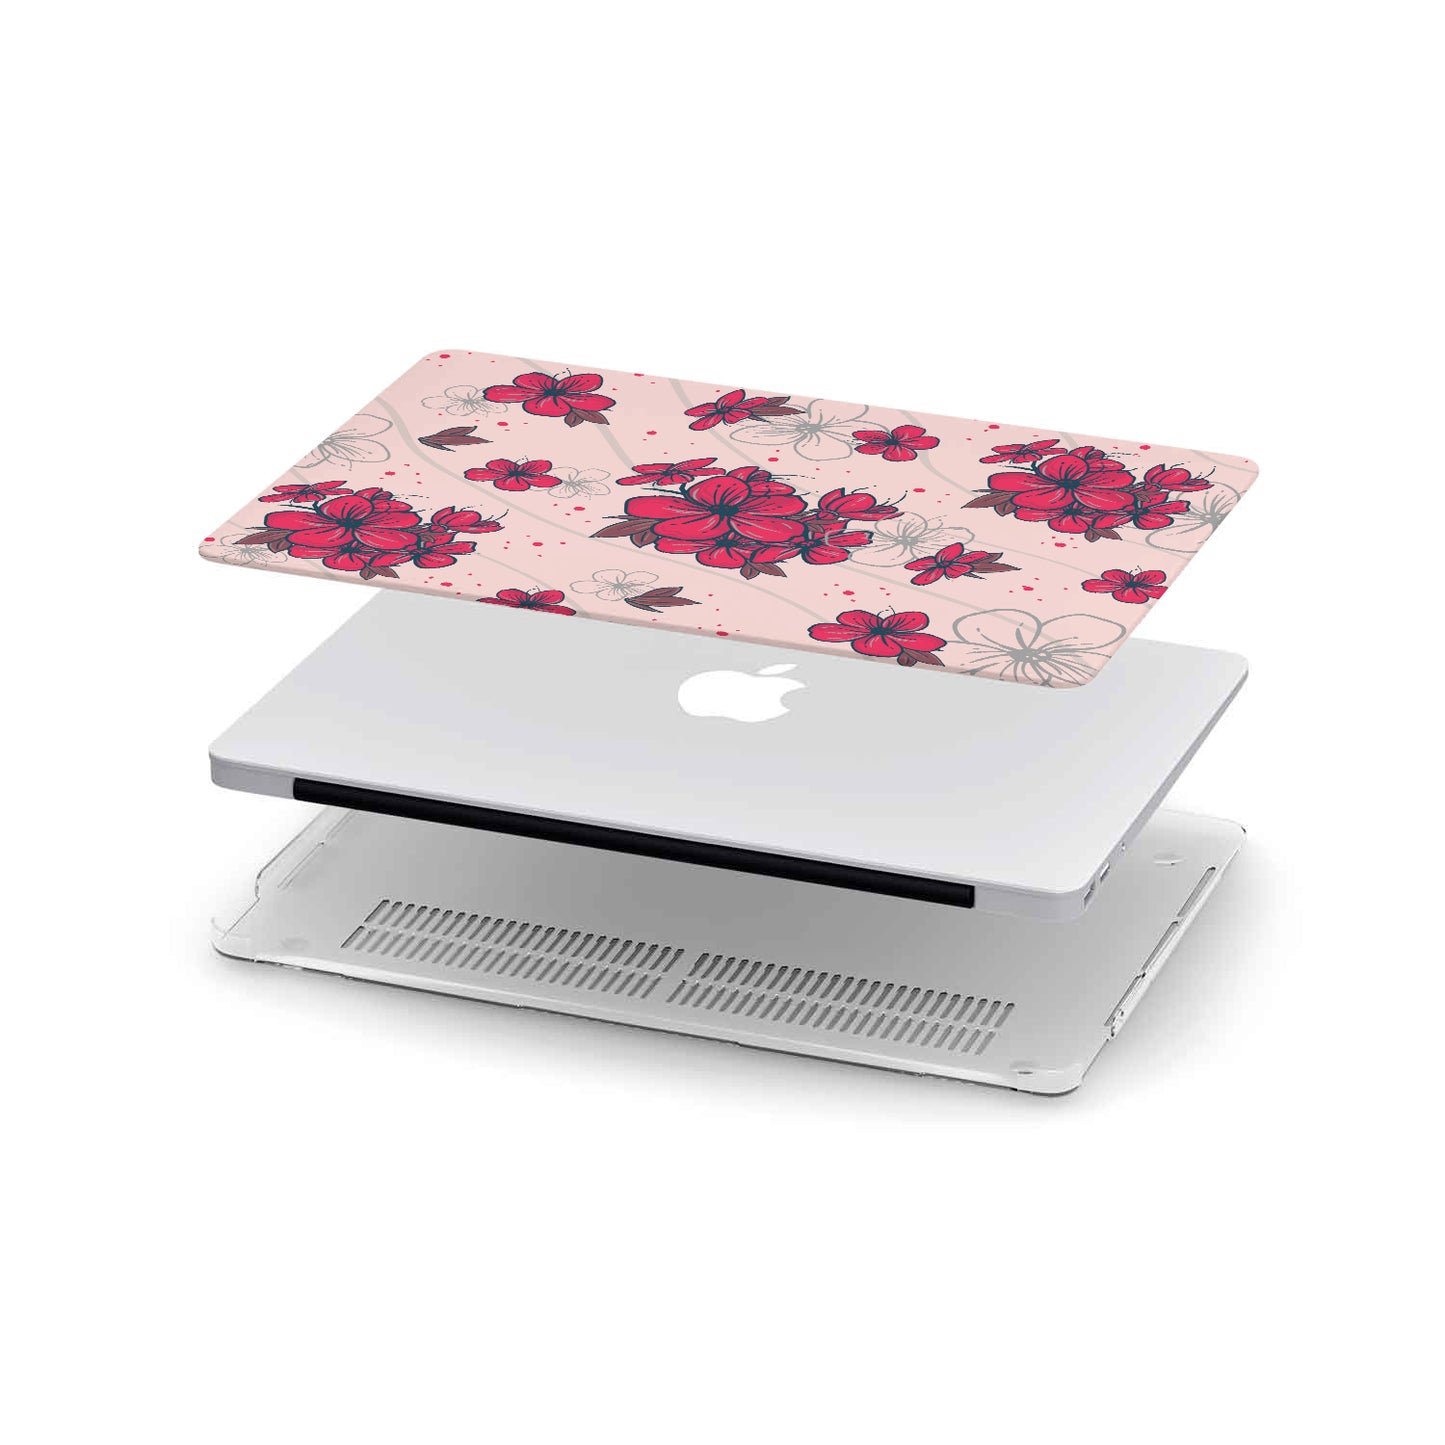 Macbook Hard Shell Case - Plum Blossom